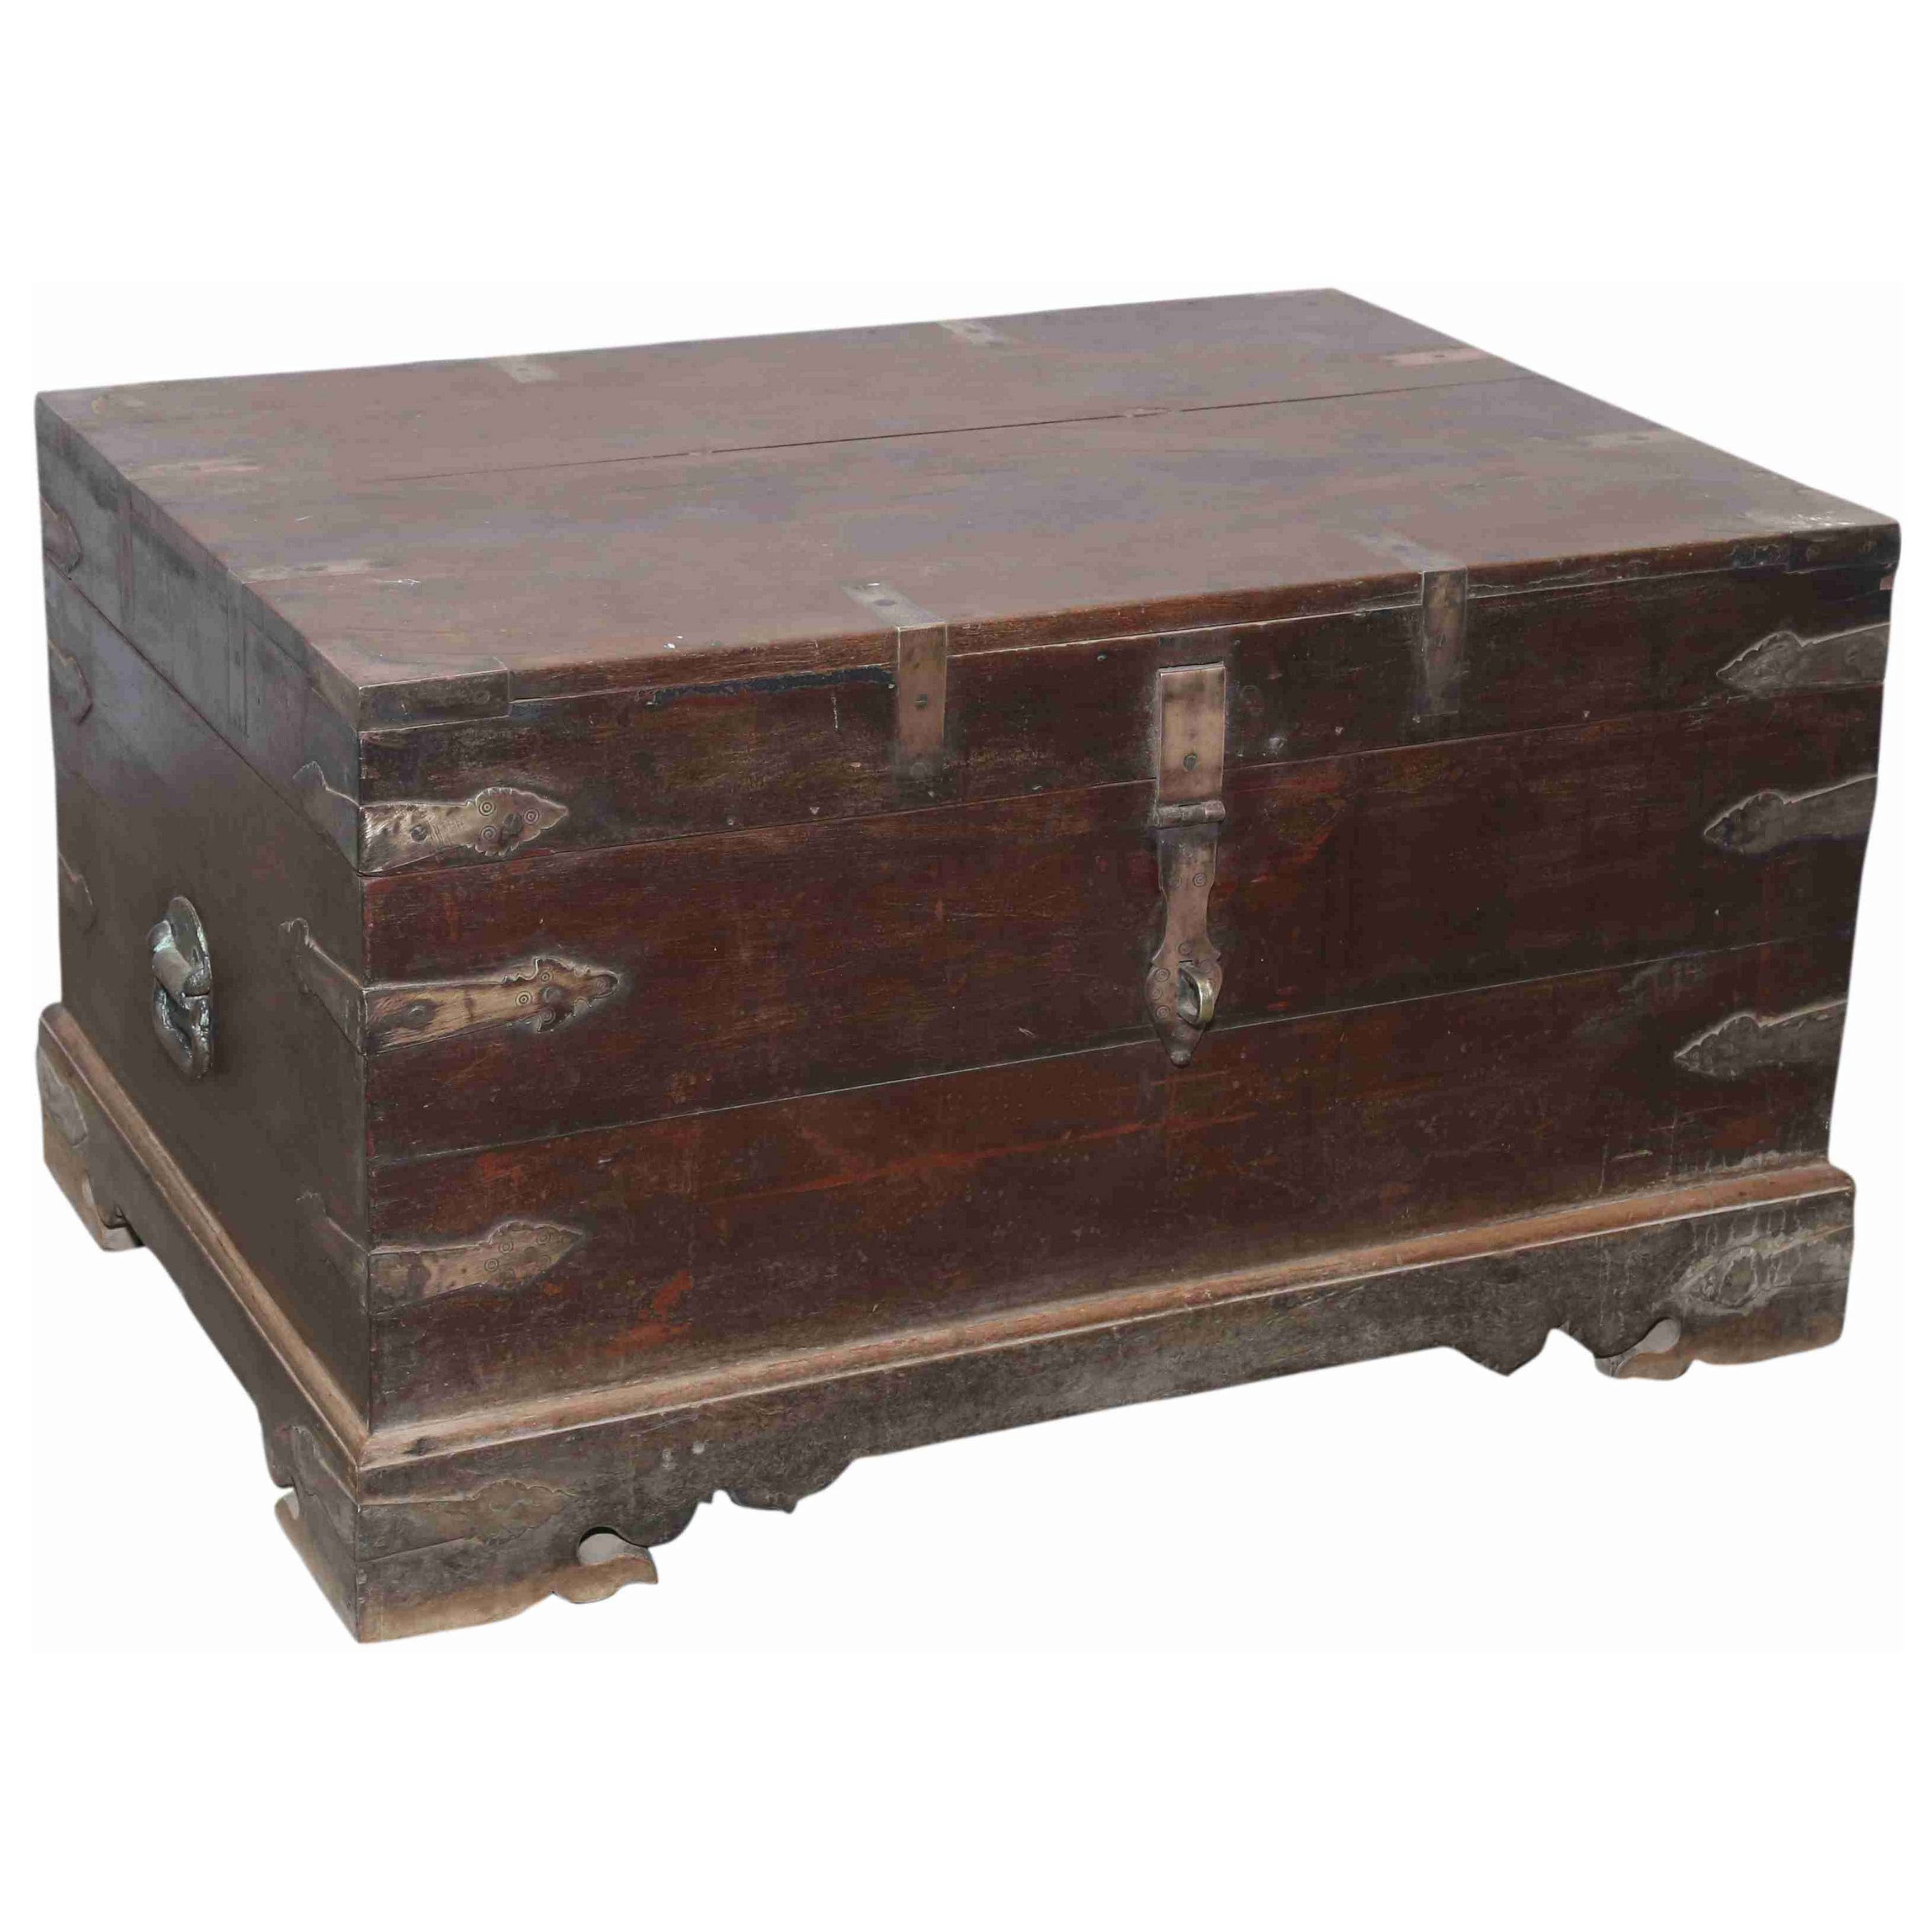 Antique Cash Box Trunk - What A Room